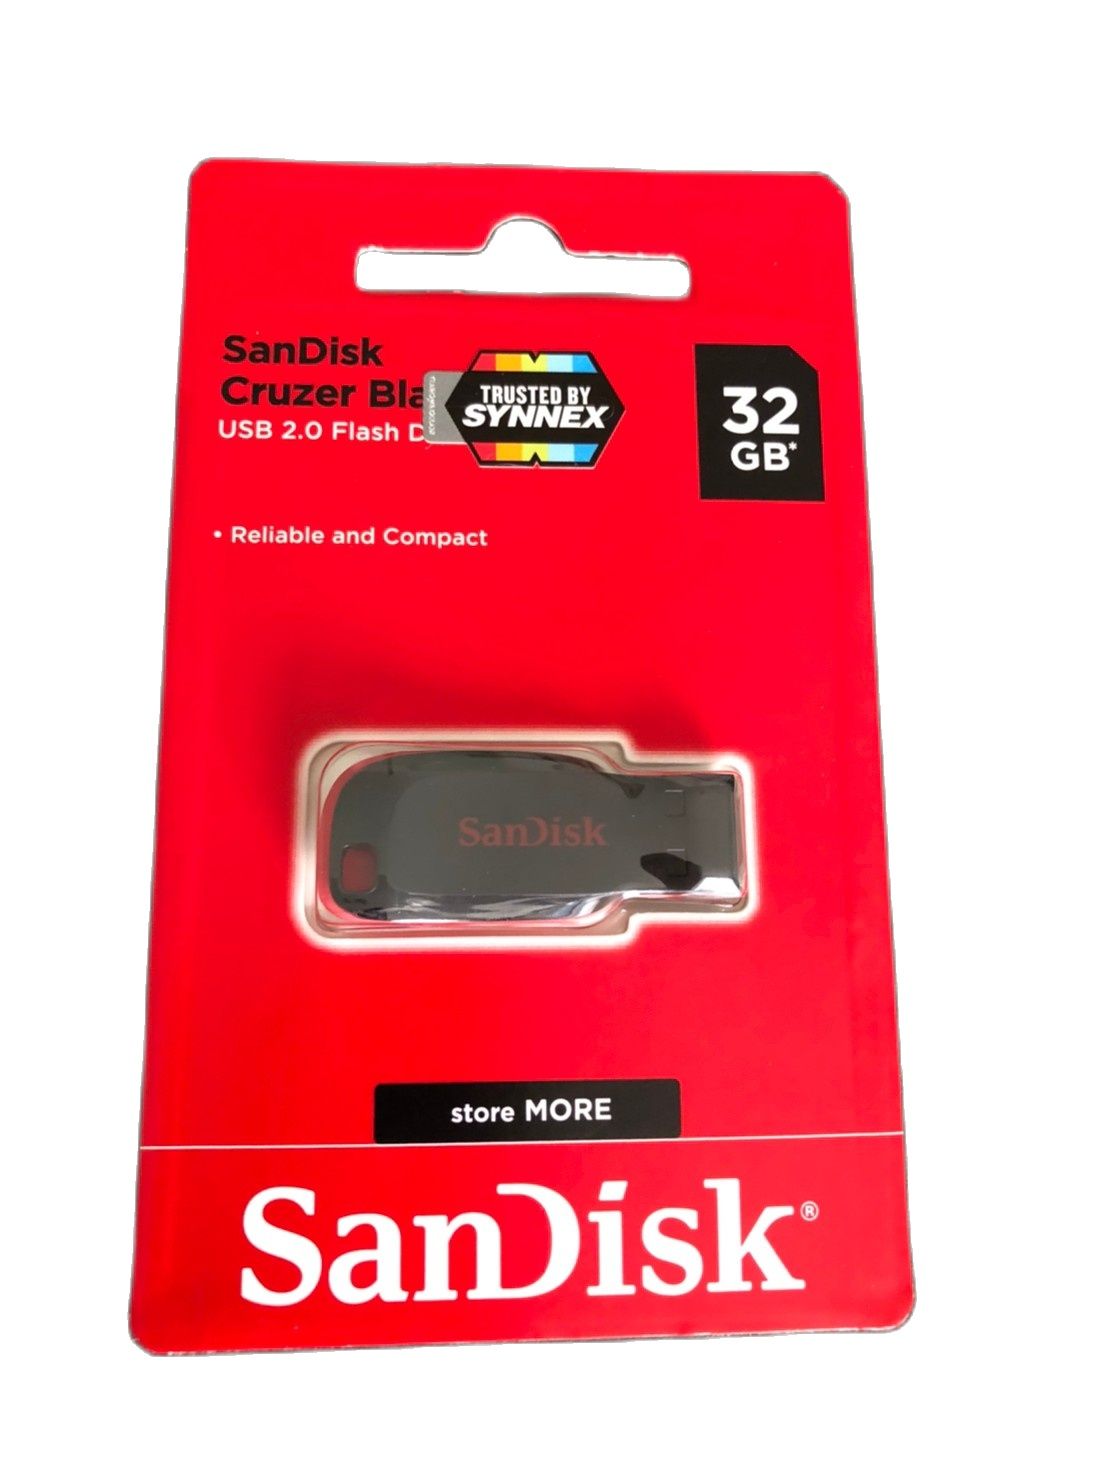 Flash Drive 32GB. / SANDISK CRUZER BLADE CZ50/32GB / SDCZ50_032G_B35 / USB 2.0 Flash Drive / ตัวเก็บข้อมูล / อุปกรณ์จัดเก็บข้อมูล / แฟลชไดร์ฟ ความจุ 32 จิ๊ก ยี่ห้อแซนดิสก์